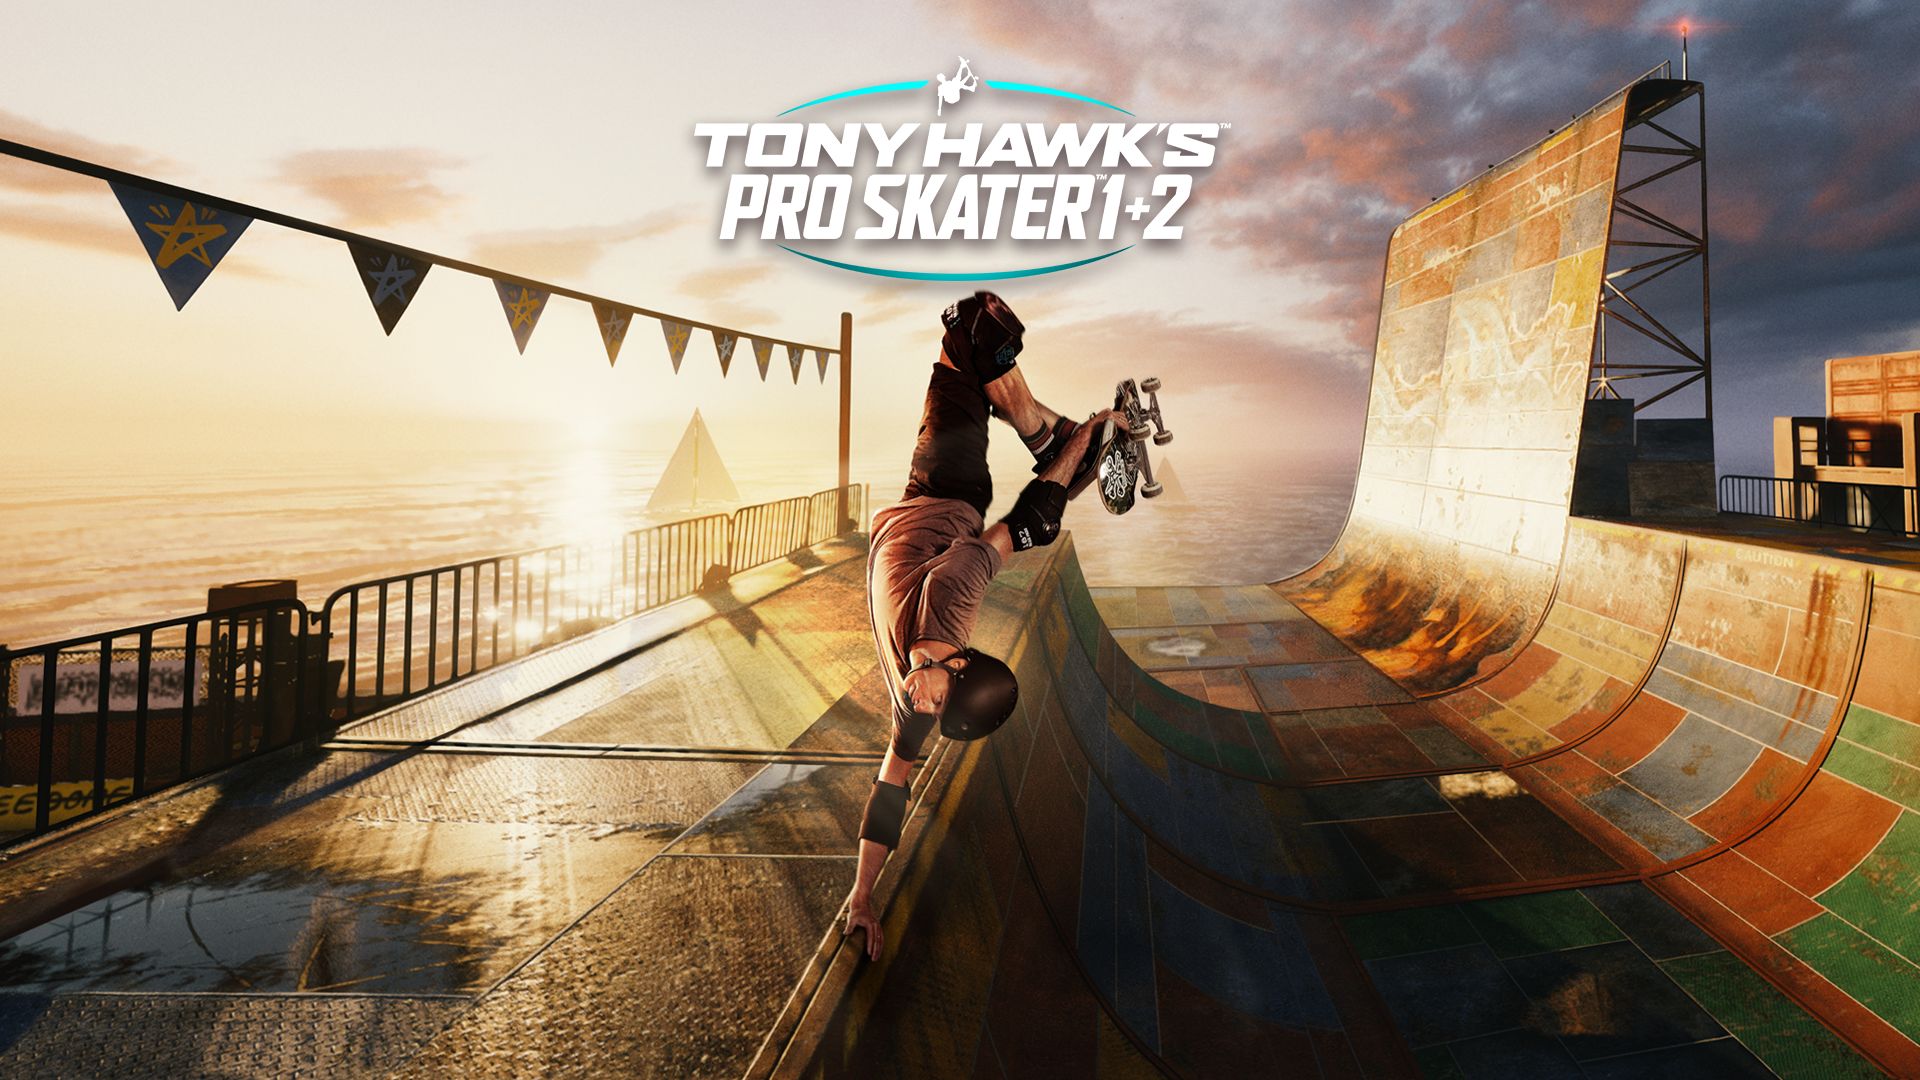 Tony Hawk's™ Pro Skater™ 1 + 2 - Xbox Series X|S